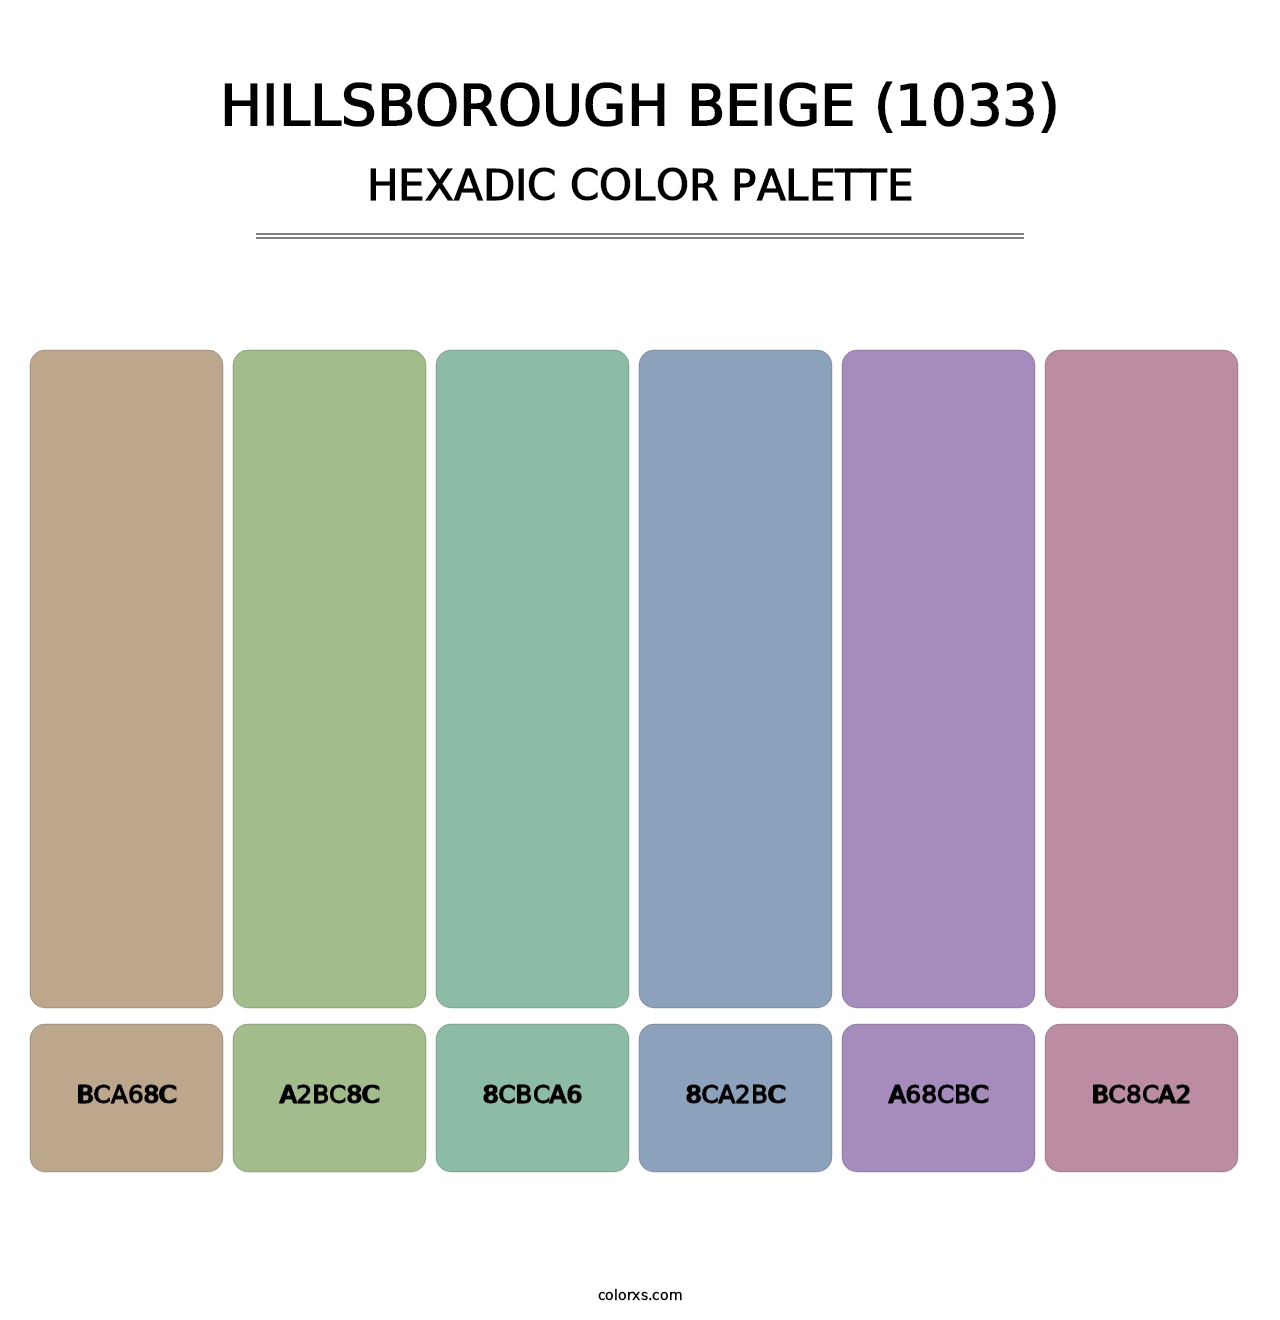 Hillsborough Beige (1033) - Hexadic Color Palette